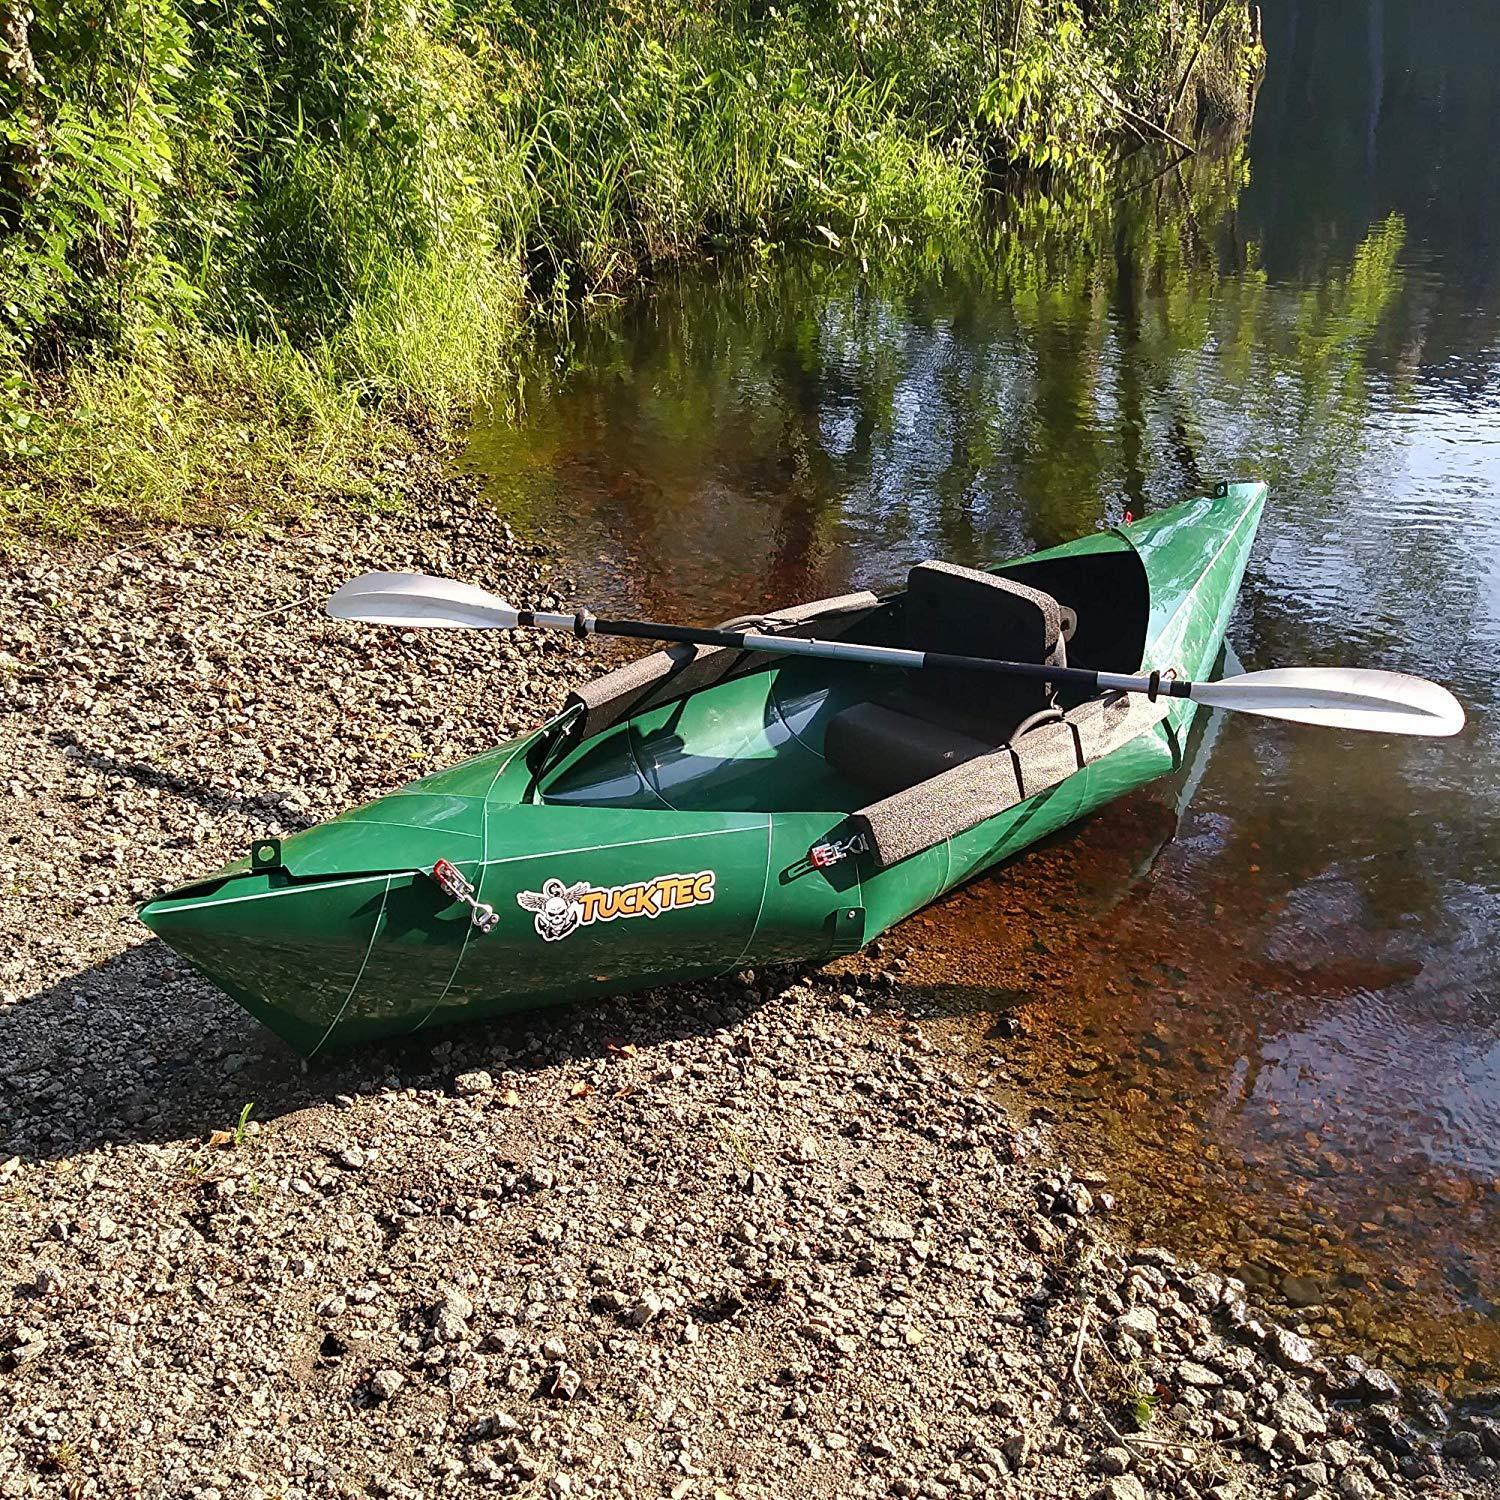 Tucktec Advanced 2020 Model 10 Ft Foldable Kayak Portable Lightweight Canoe Green New